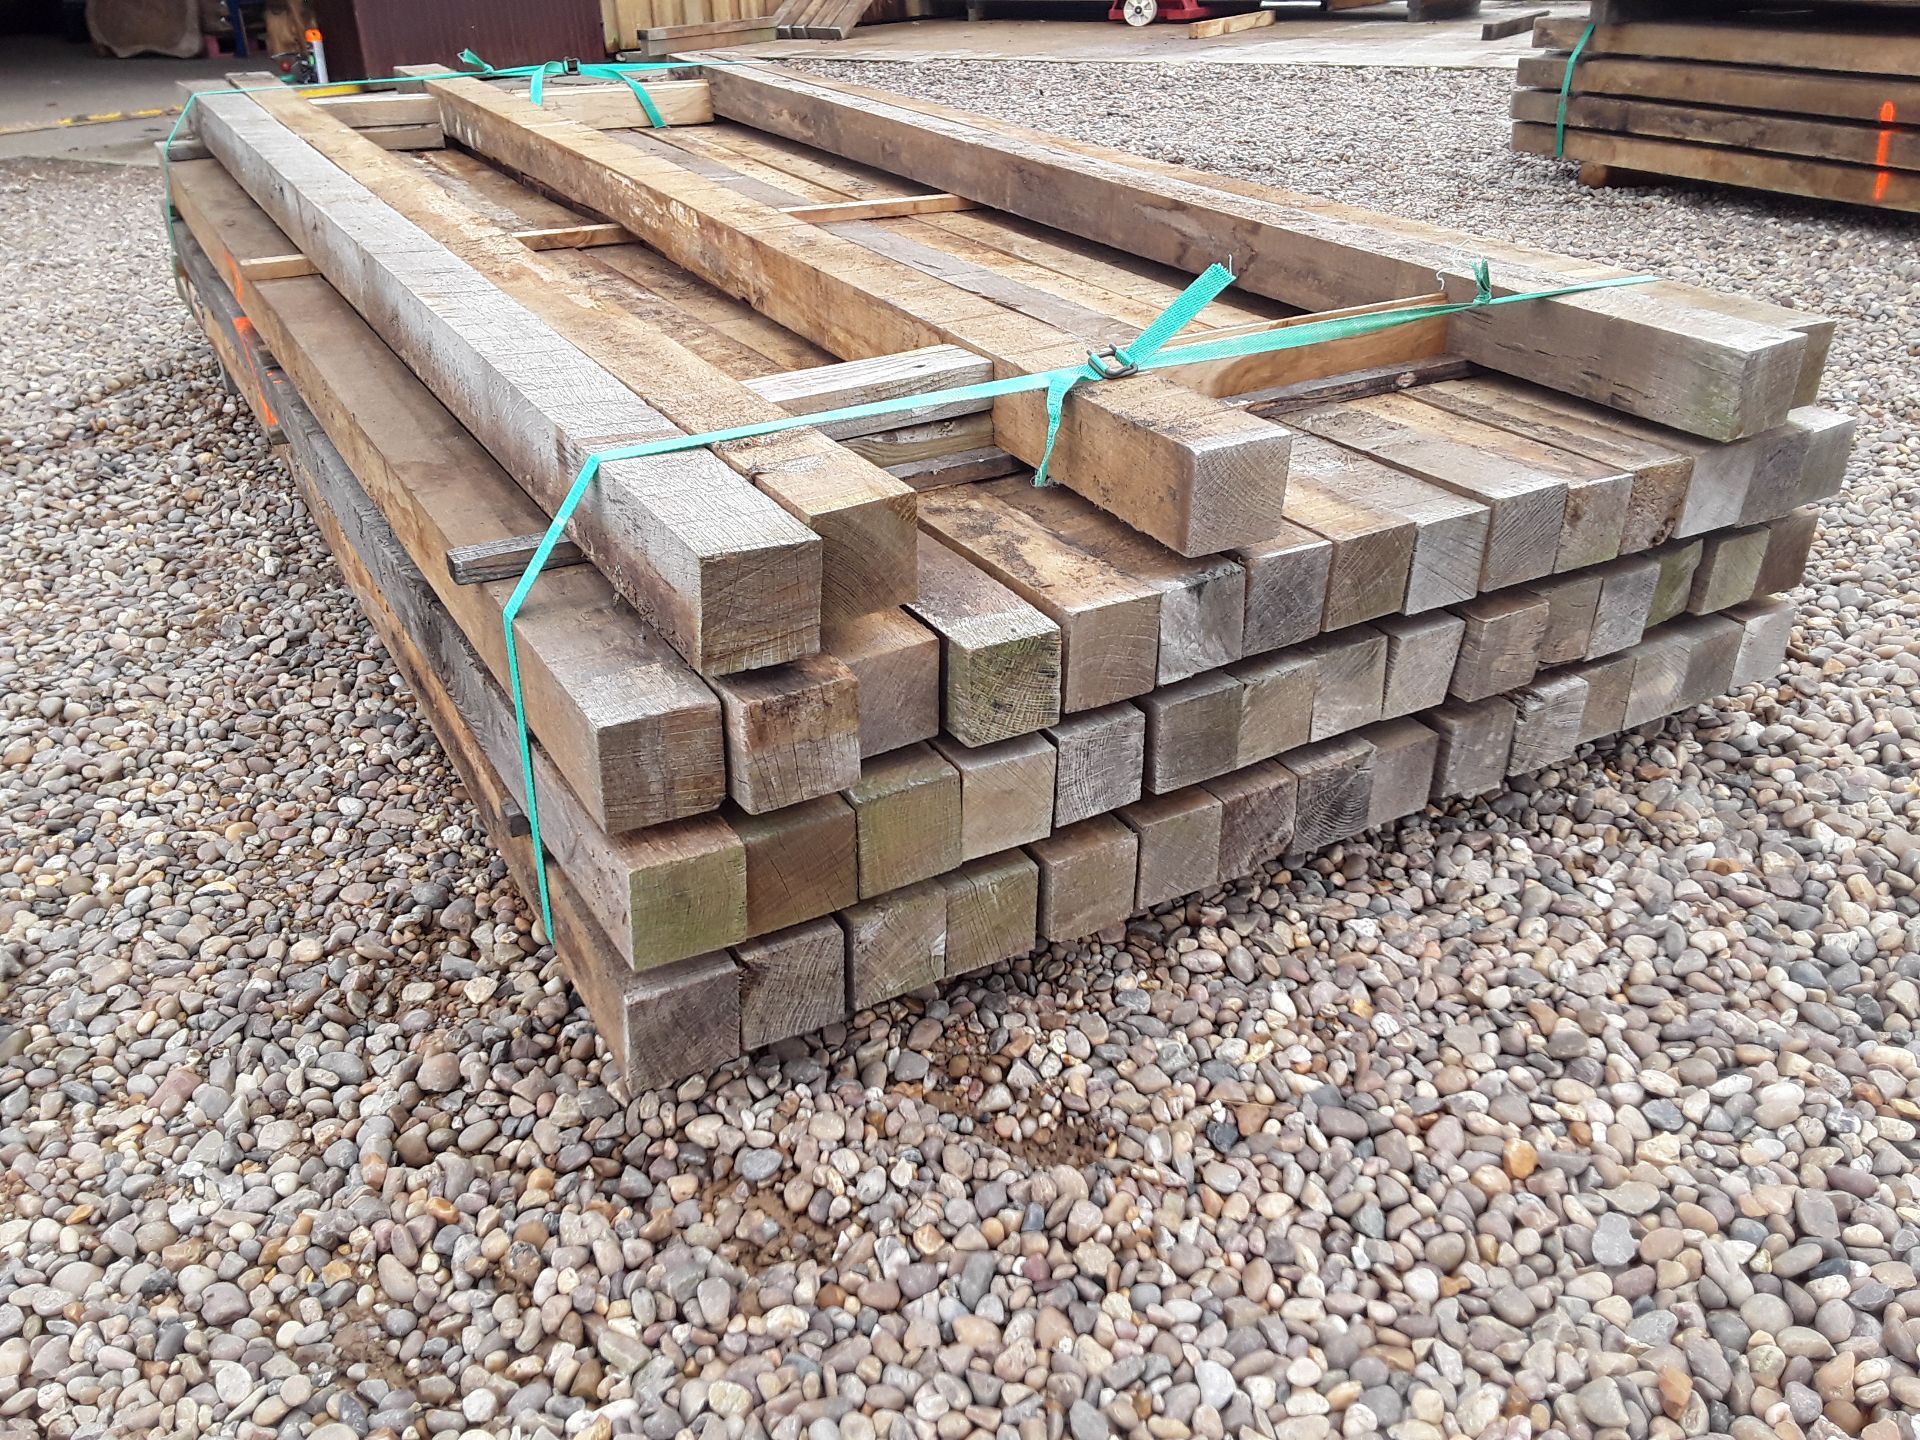 50 x Hardwood Air Dried Rustic Sawn English Oak Timber Posts - Image 4 of 5